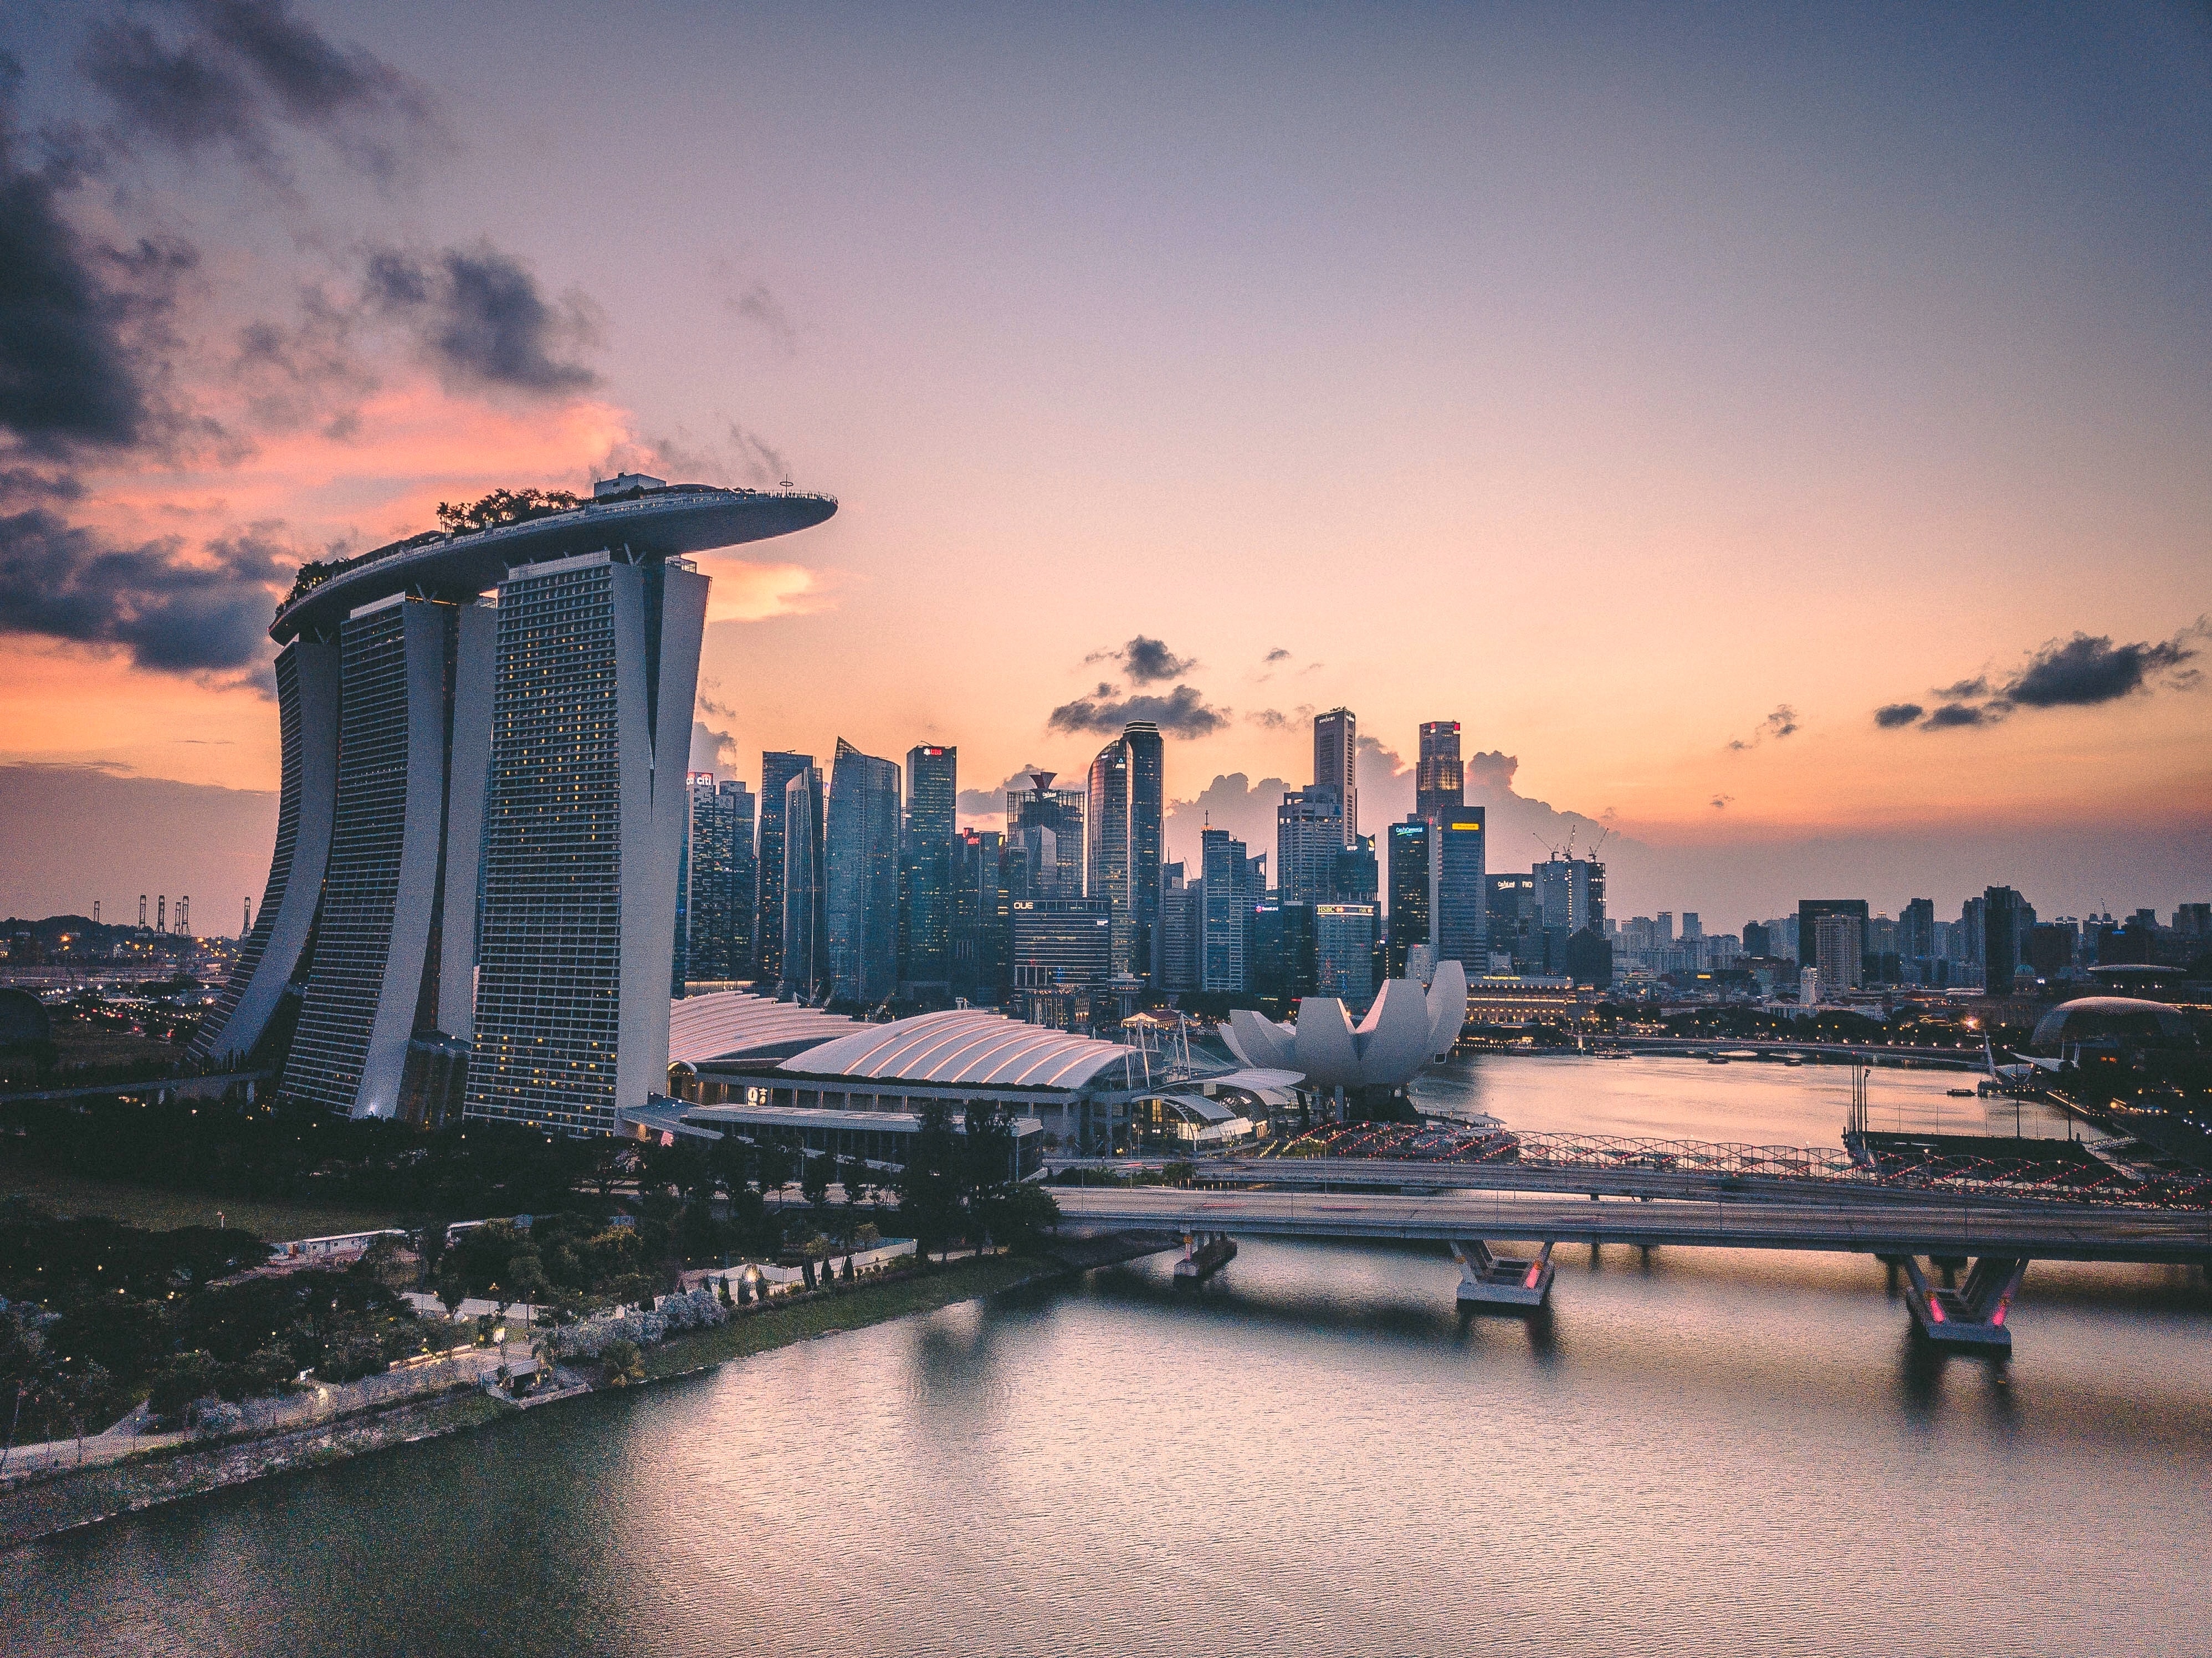 Singapore skyline taken by swapnil-bapat